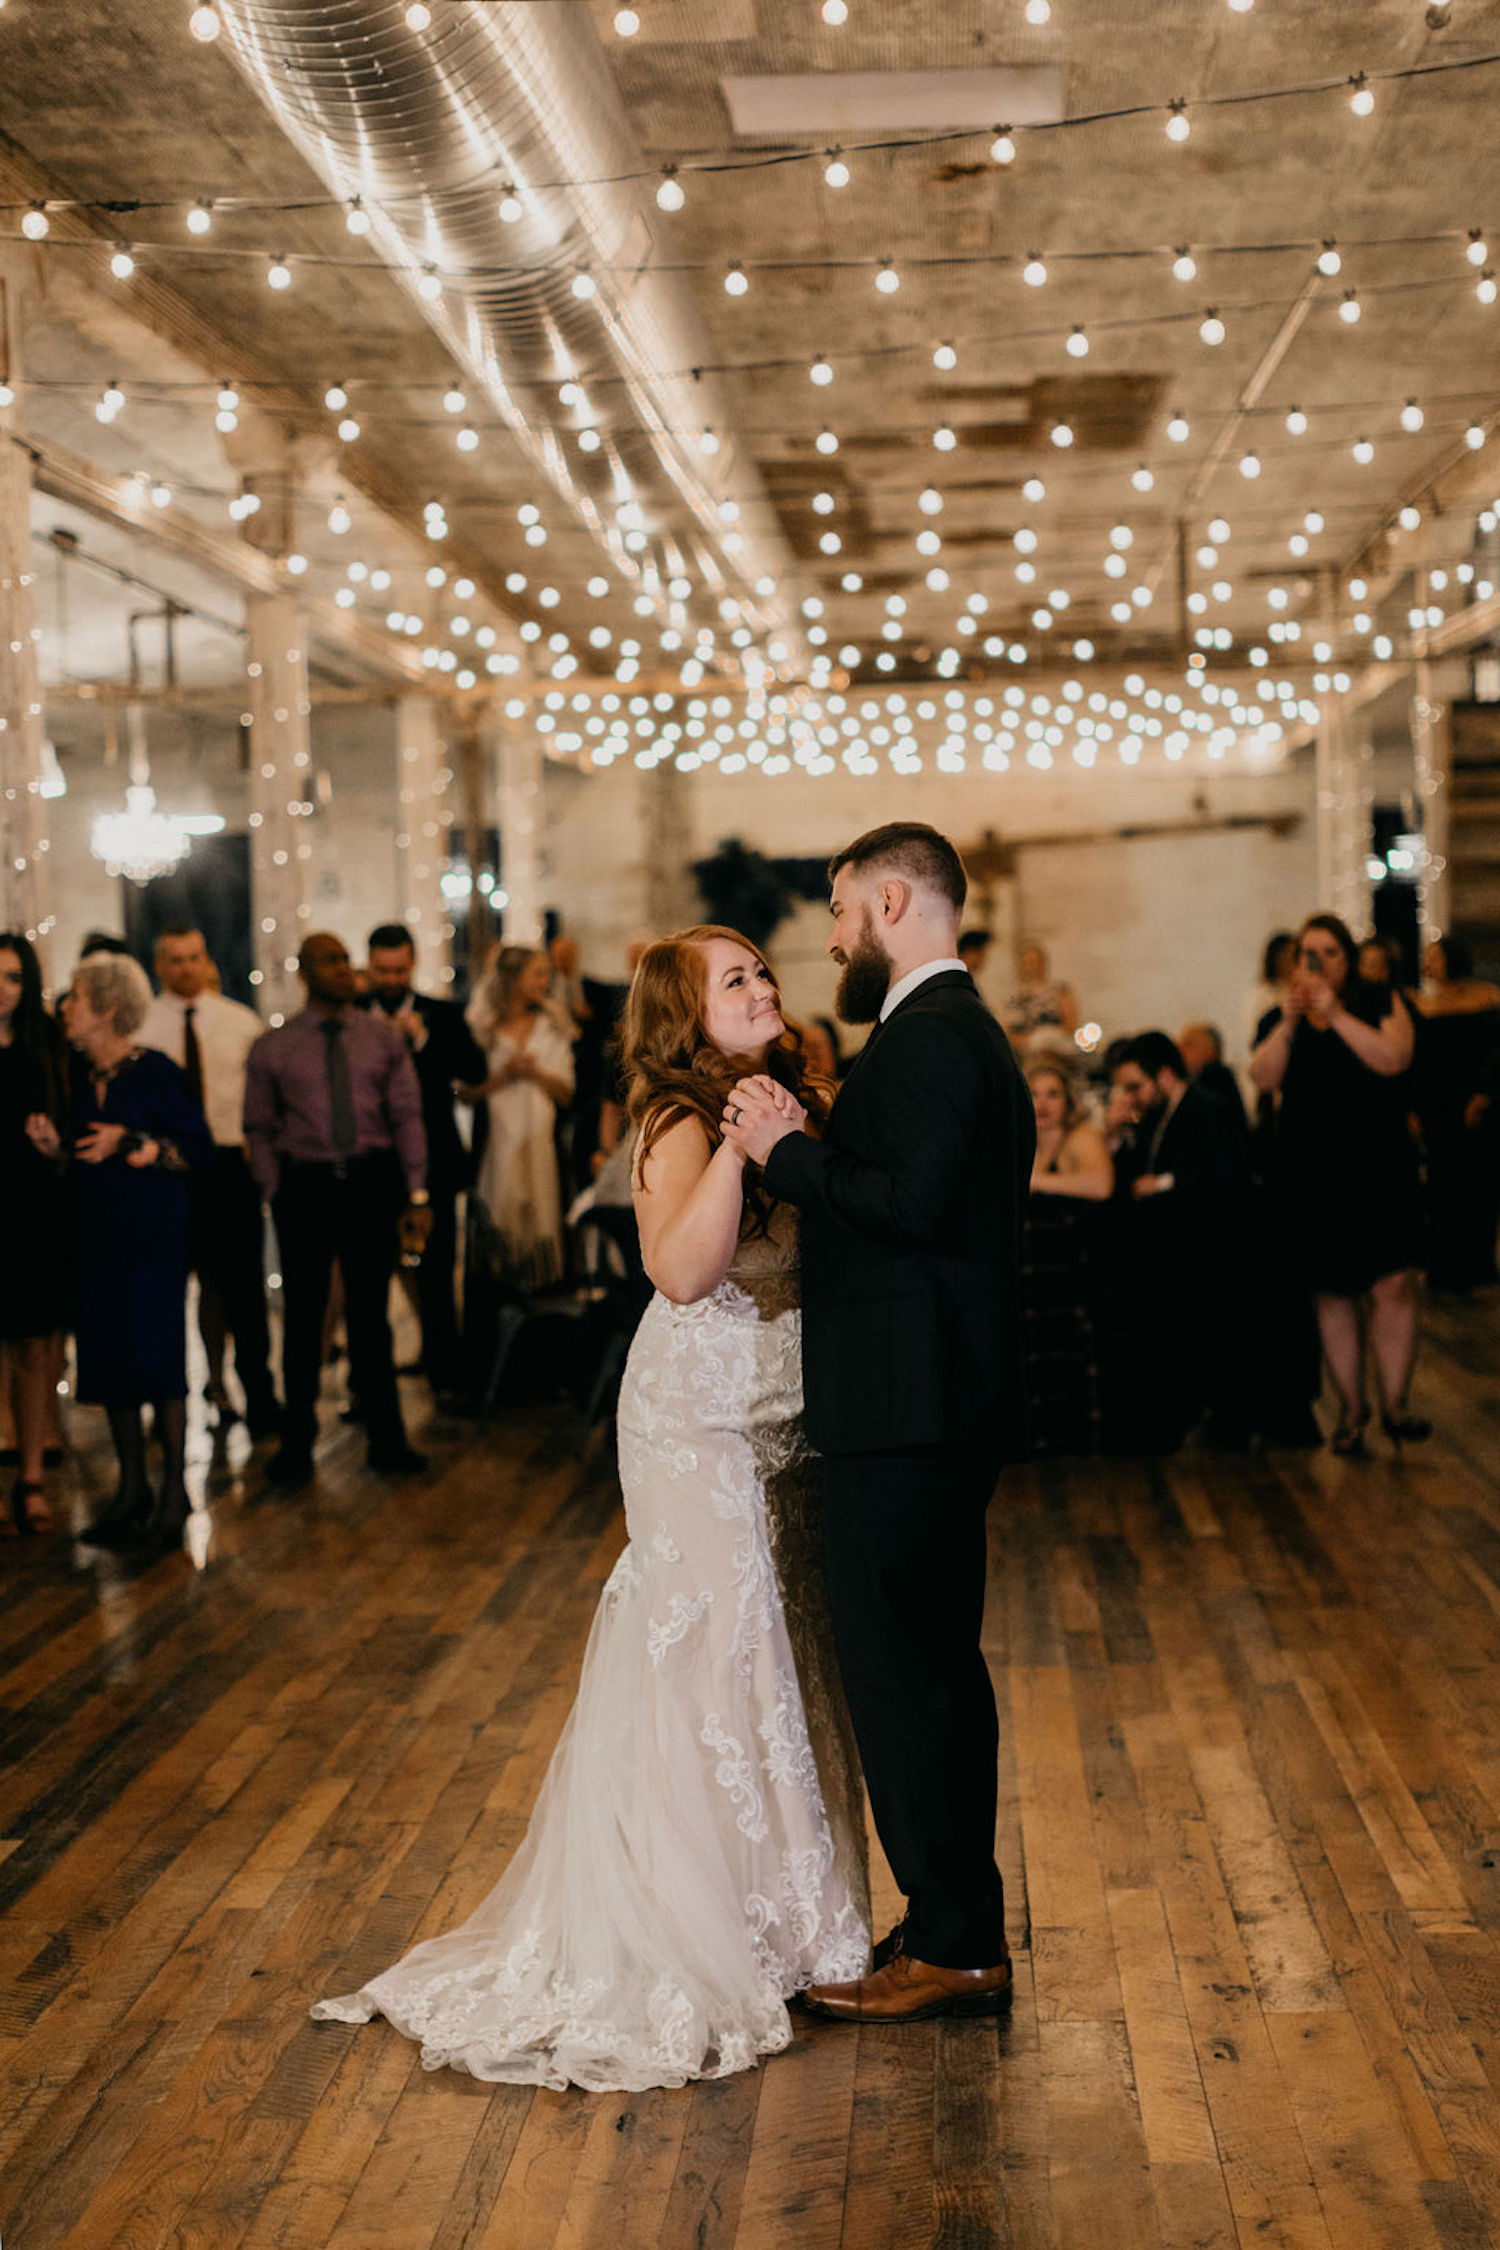 Bride and groom dancing together at their Journeyman Distillery wedding